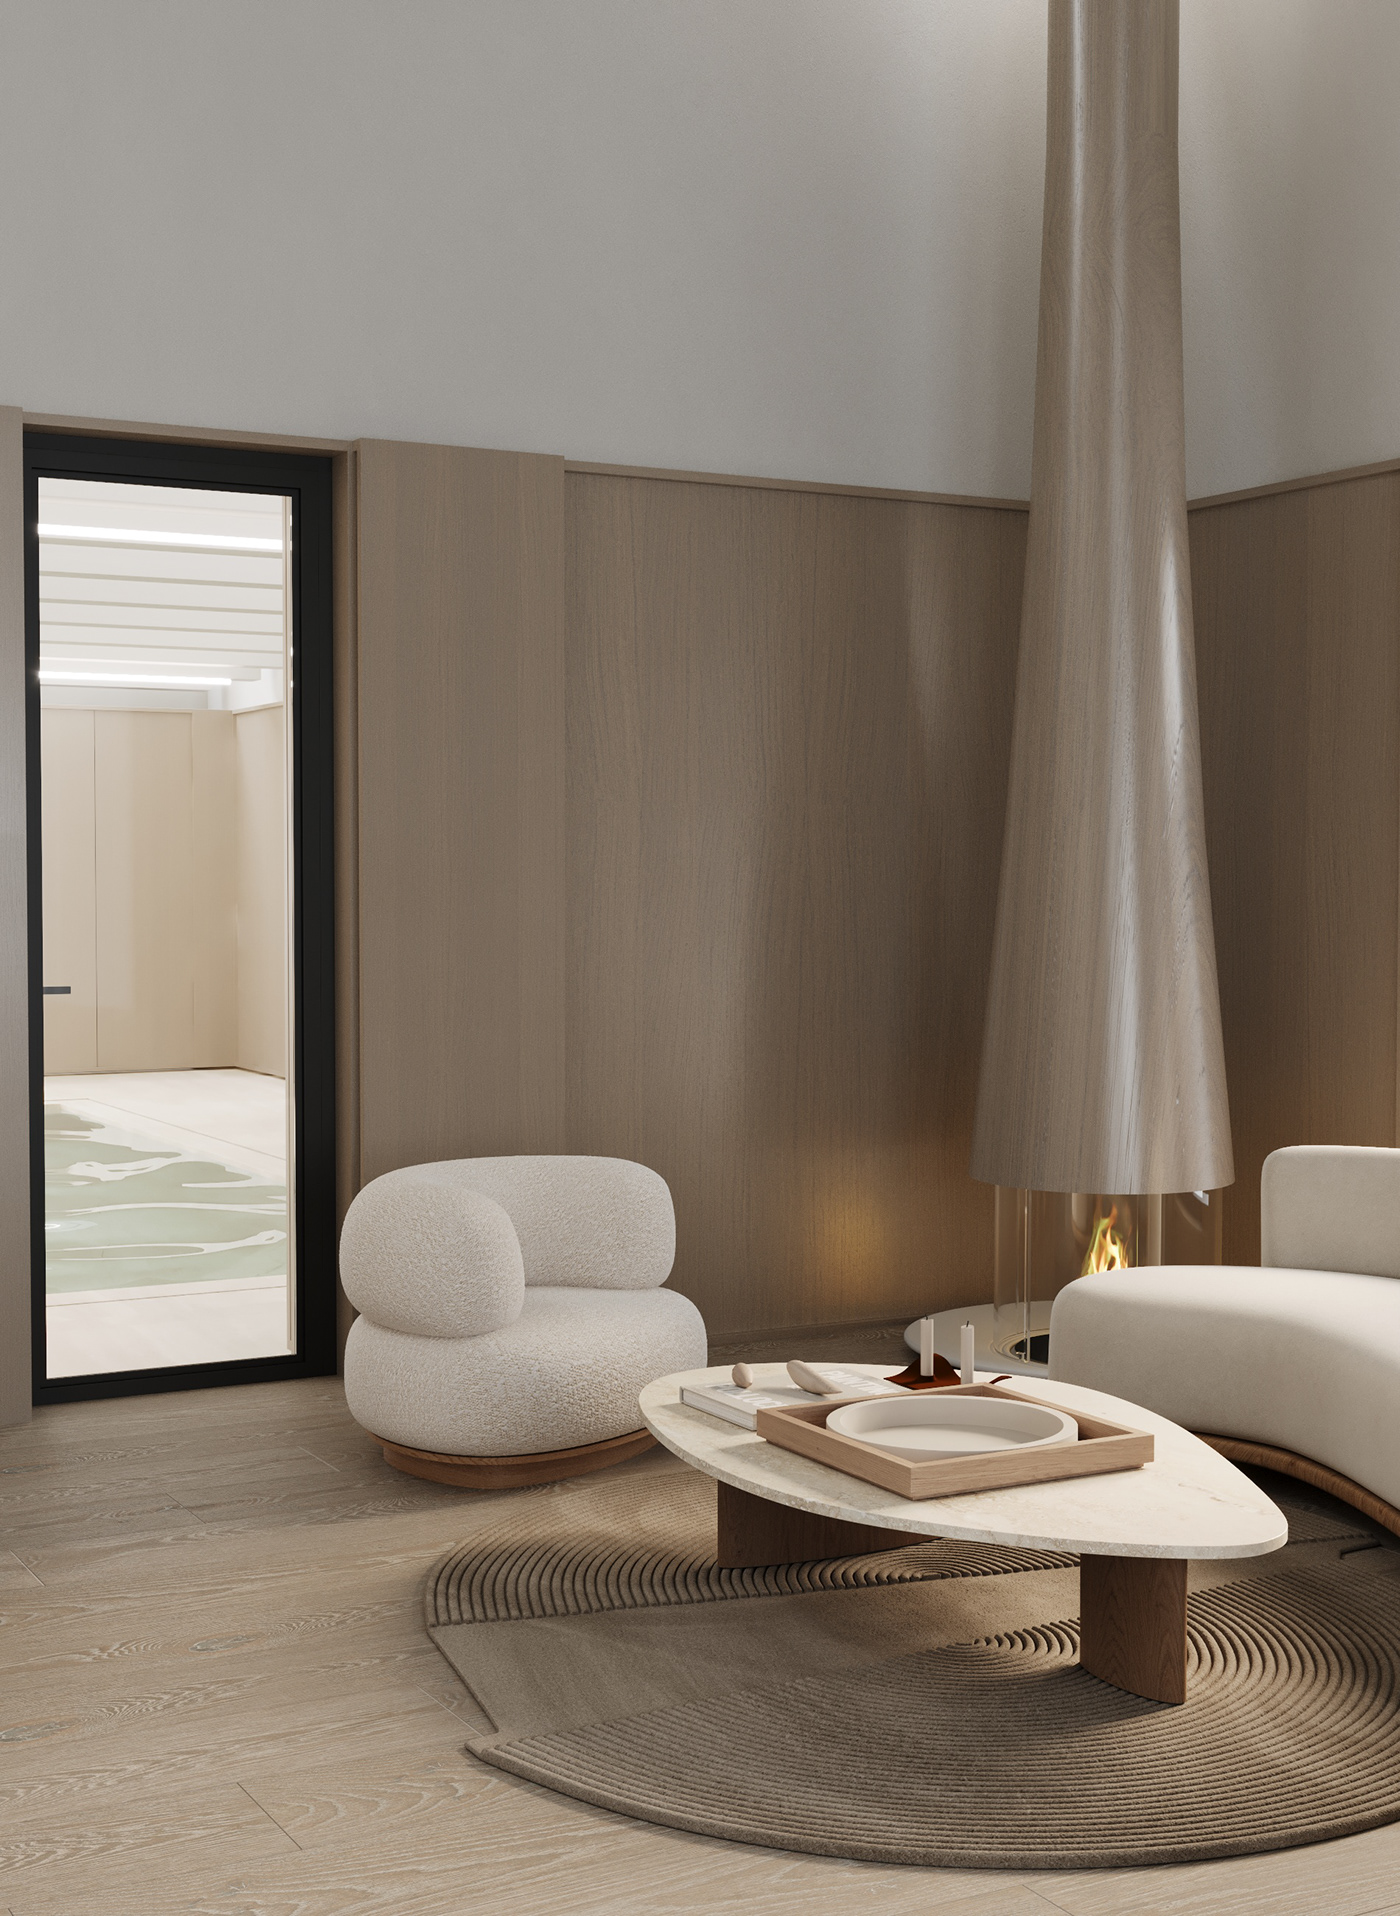 3dsmax bedroom design corona render  Dining Design indoor pool interior design  living design Minimal interior yoga nook